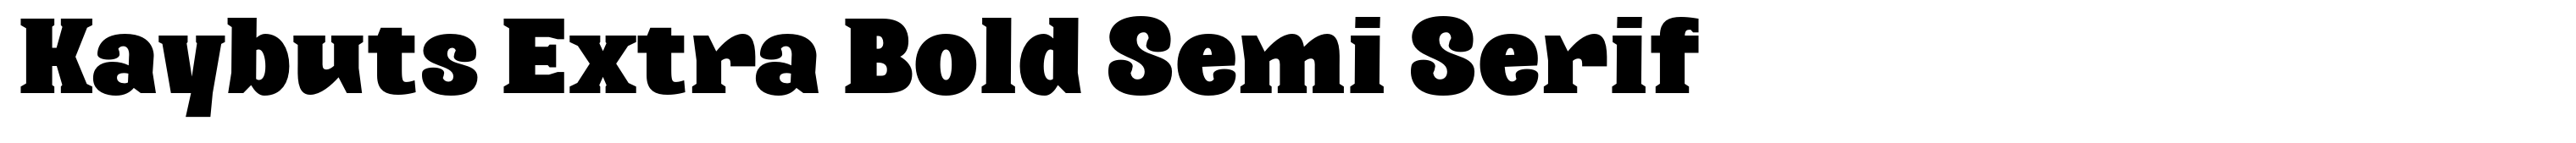 Kaybuts Extra Bold Semi Serif